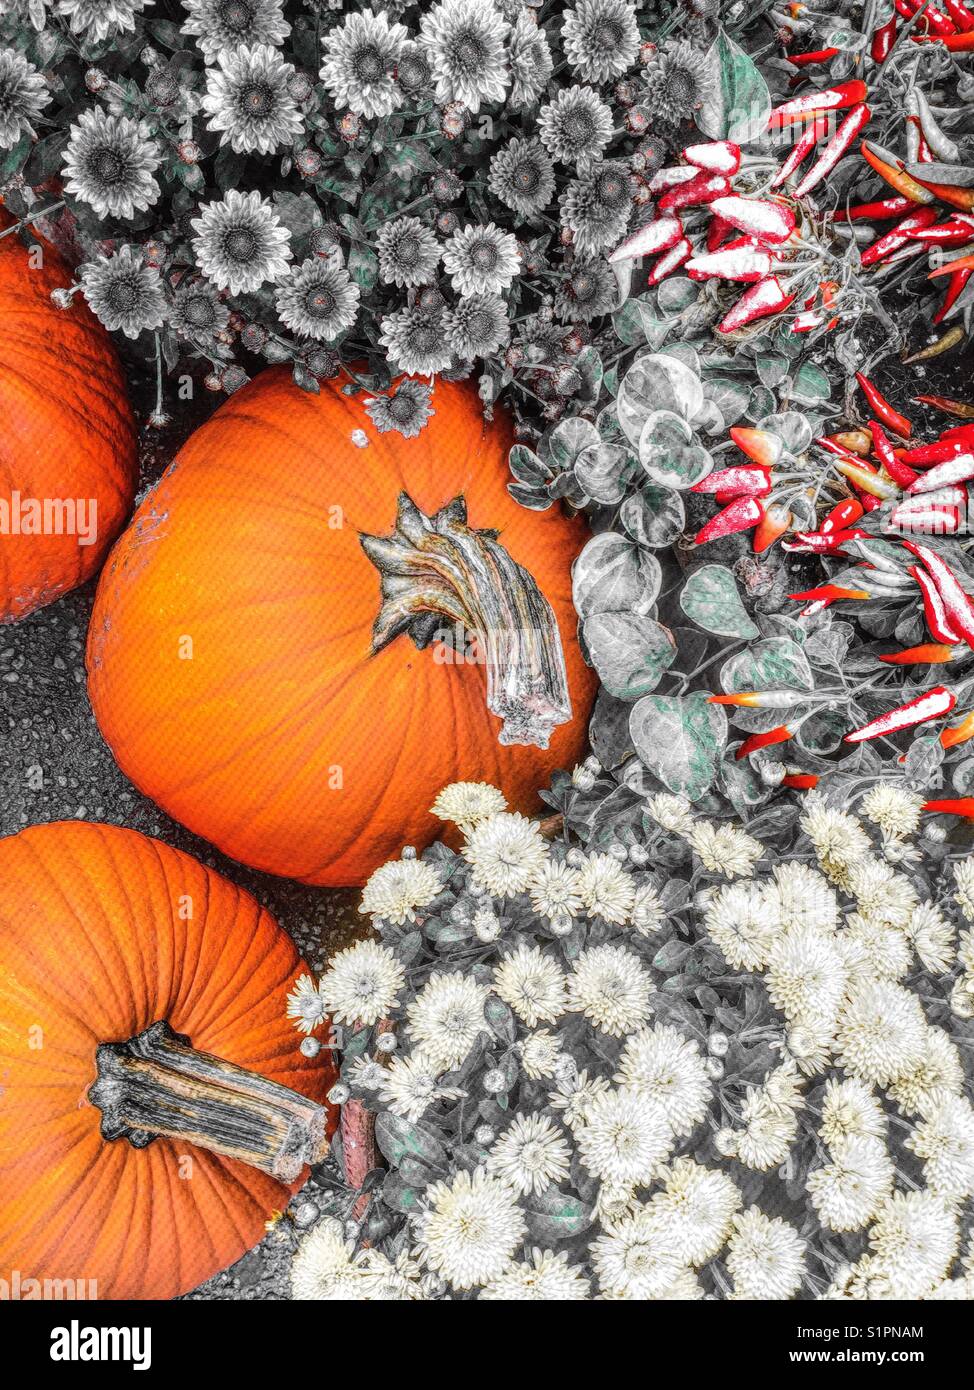 Fall display of flowers and pumpkins, USA Stock Photo